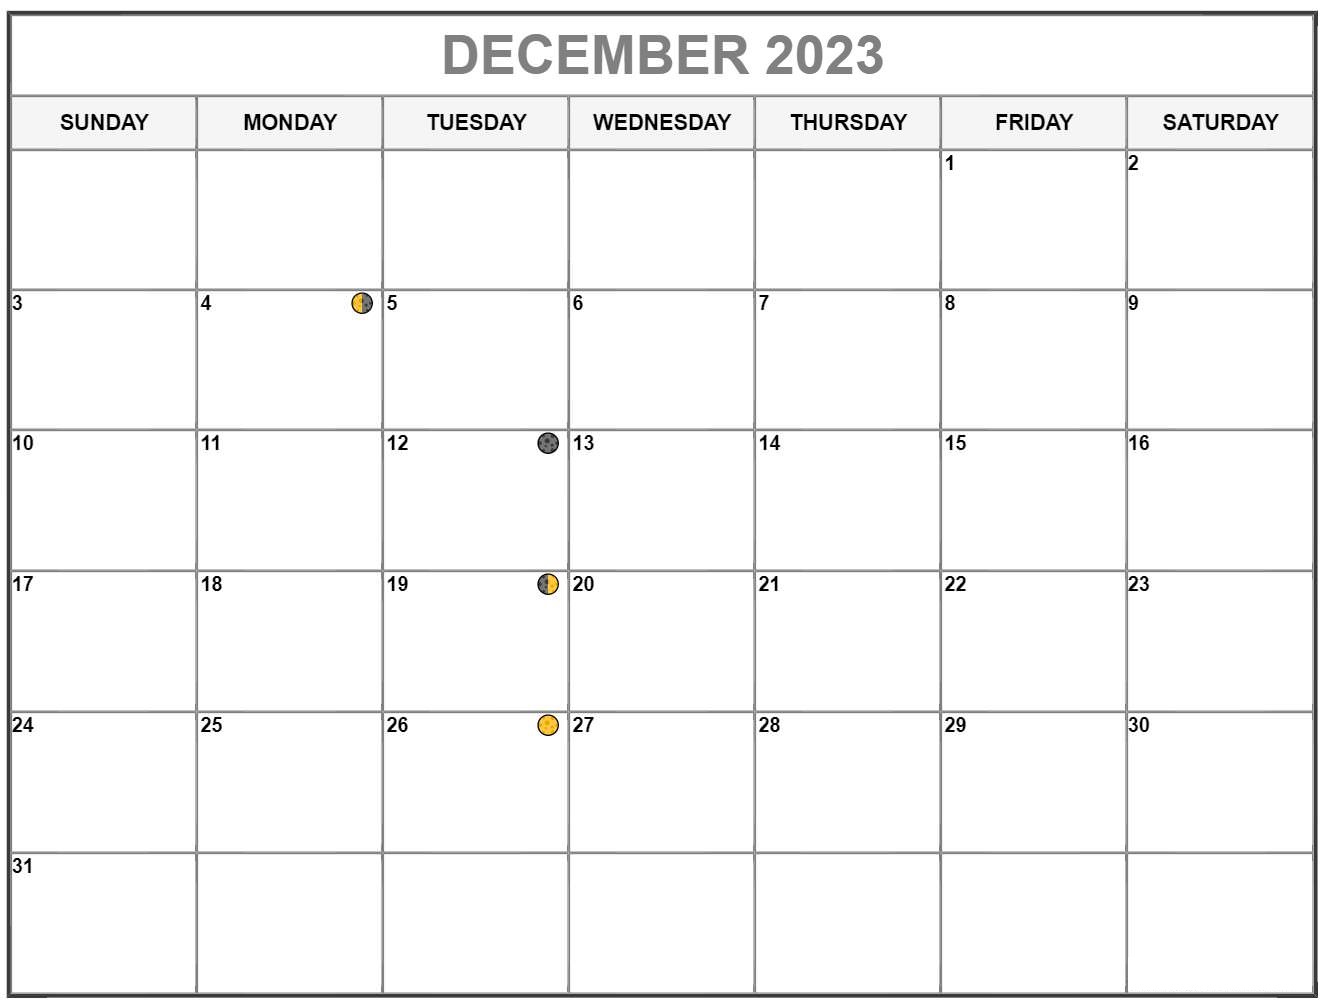 December 2023 Lunar Calendar